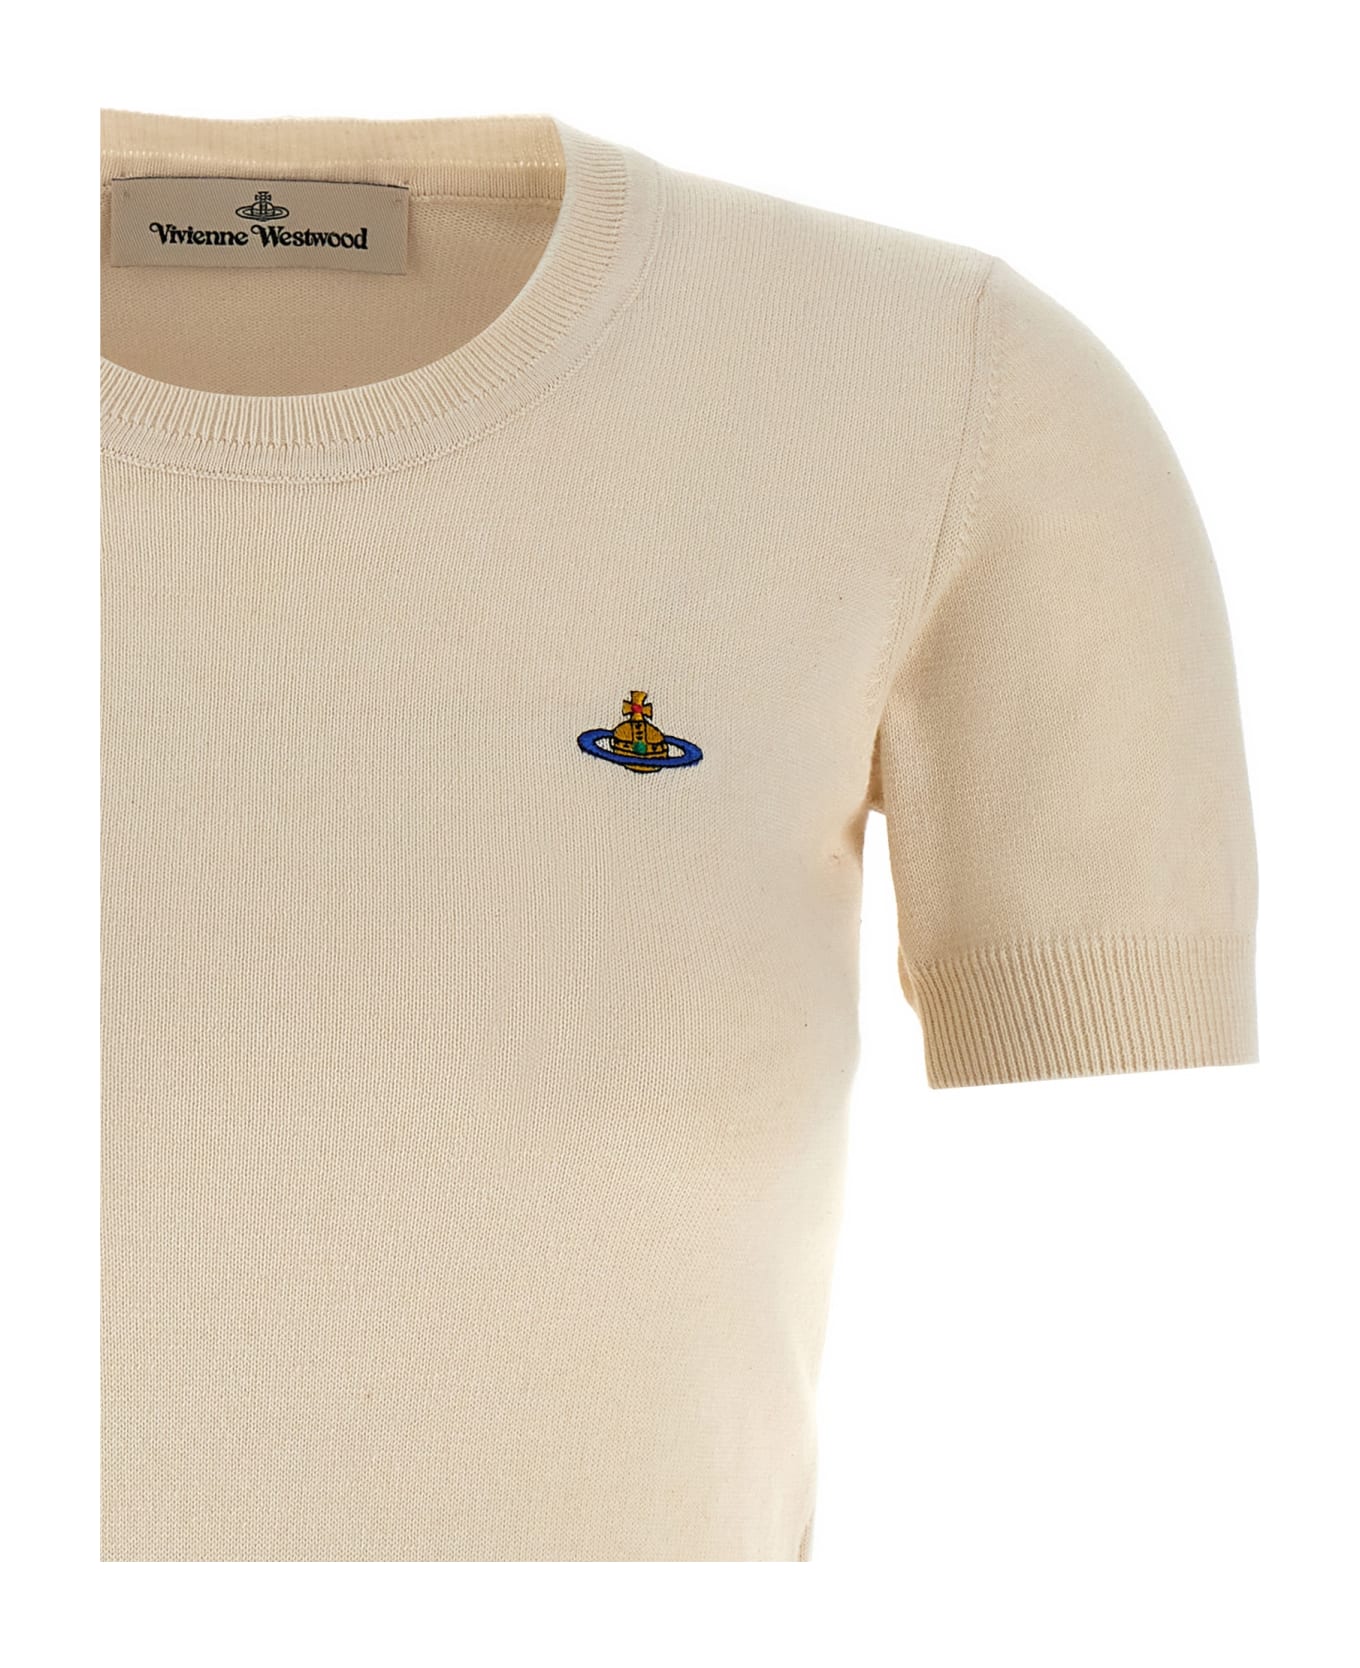 Vivienne Westwood 'bea' Sweater - Cream